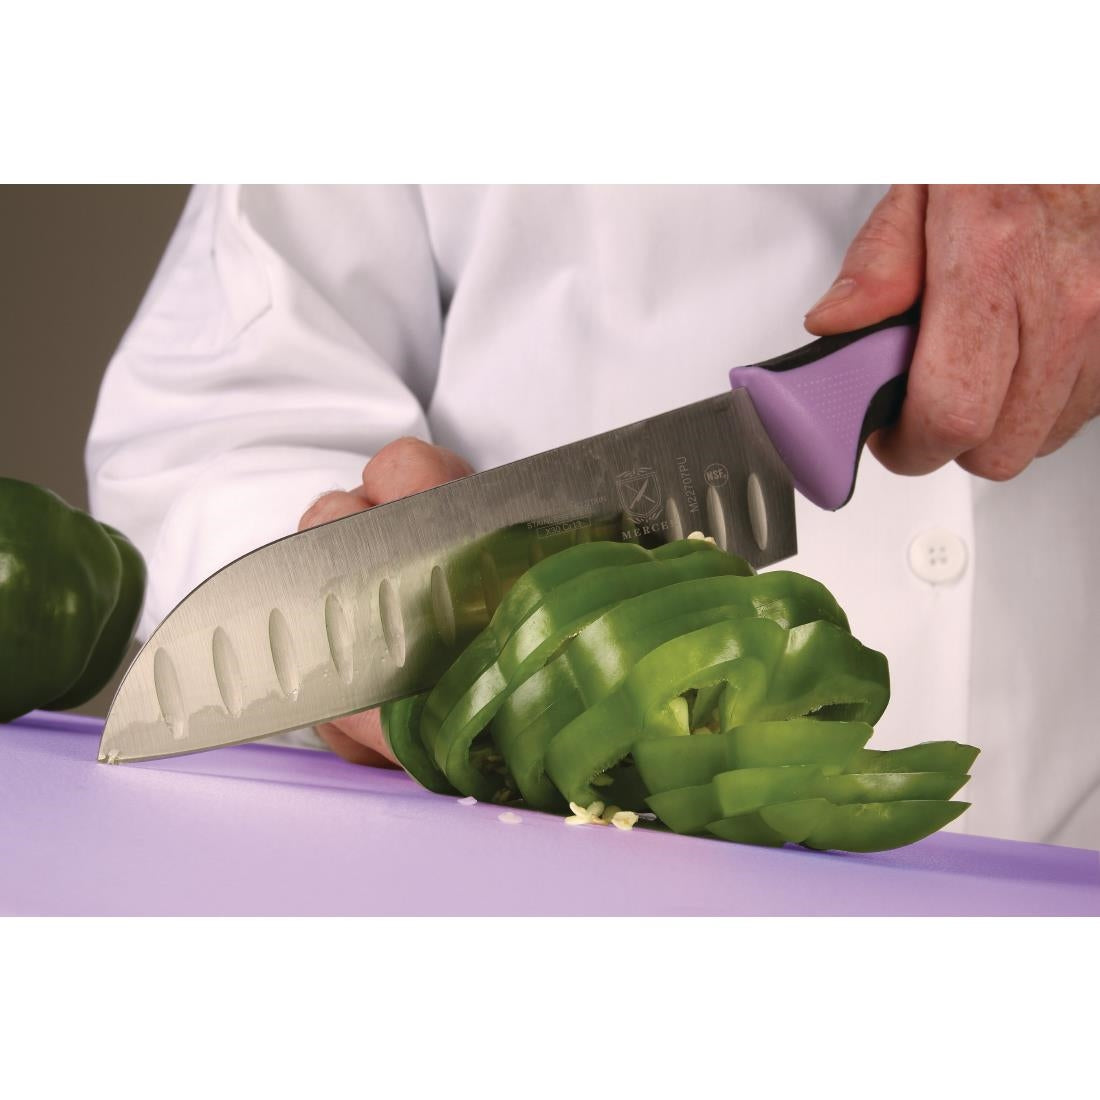 FB502 Mercer Millennia Culinary Allergen Safety Santoku Knife 18cm JD Catering Equipment Solutions Ltd